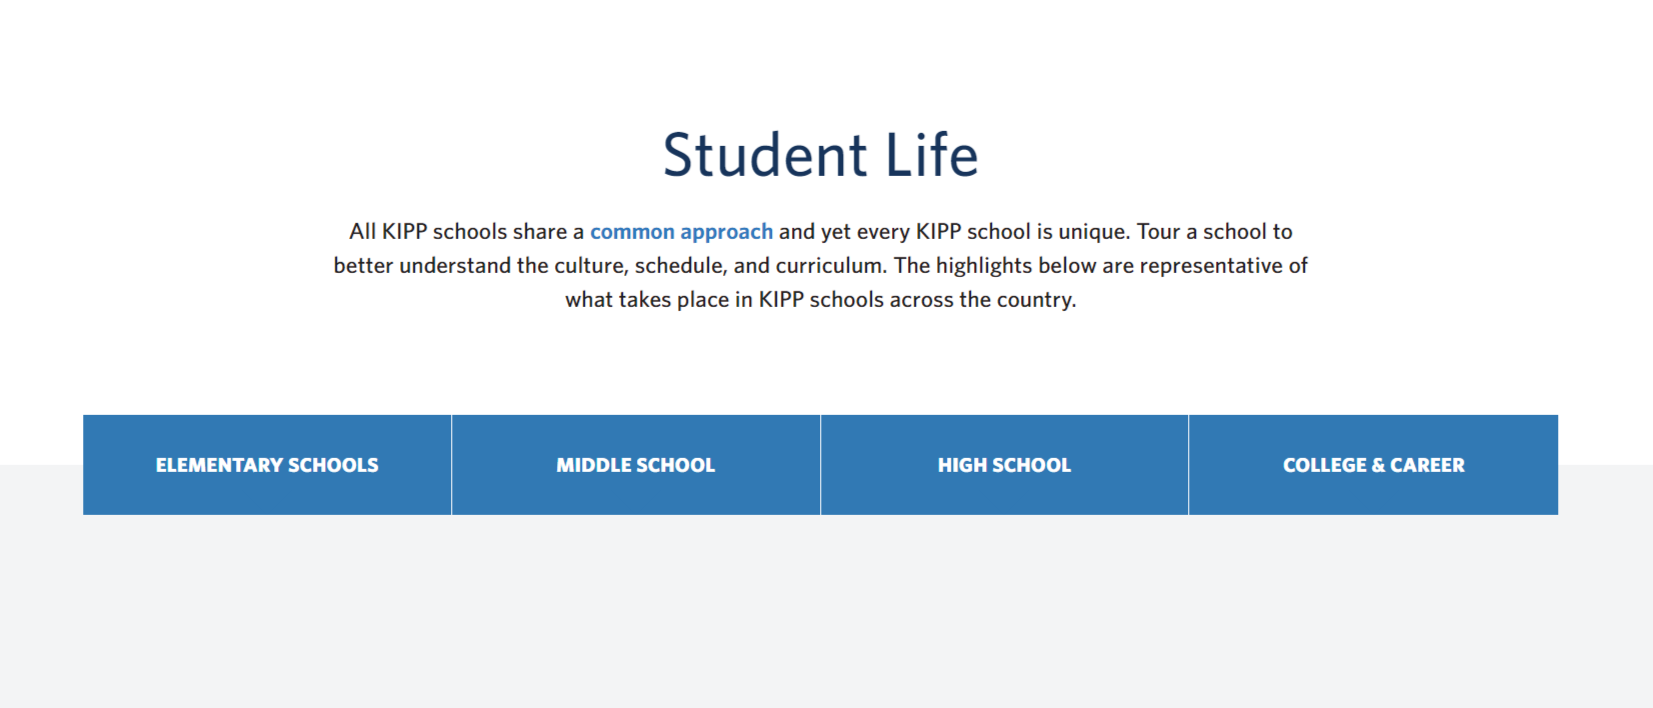 KIPP product / service